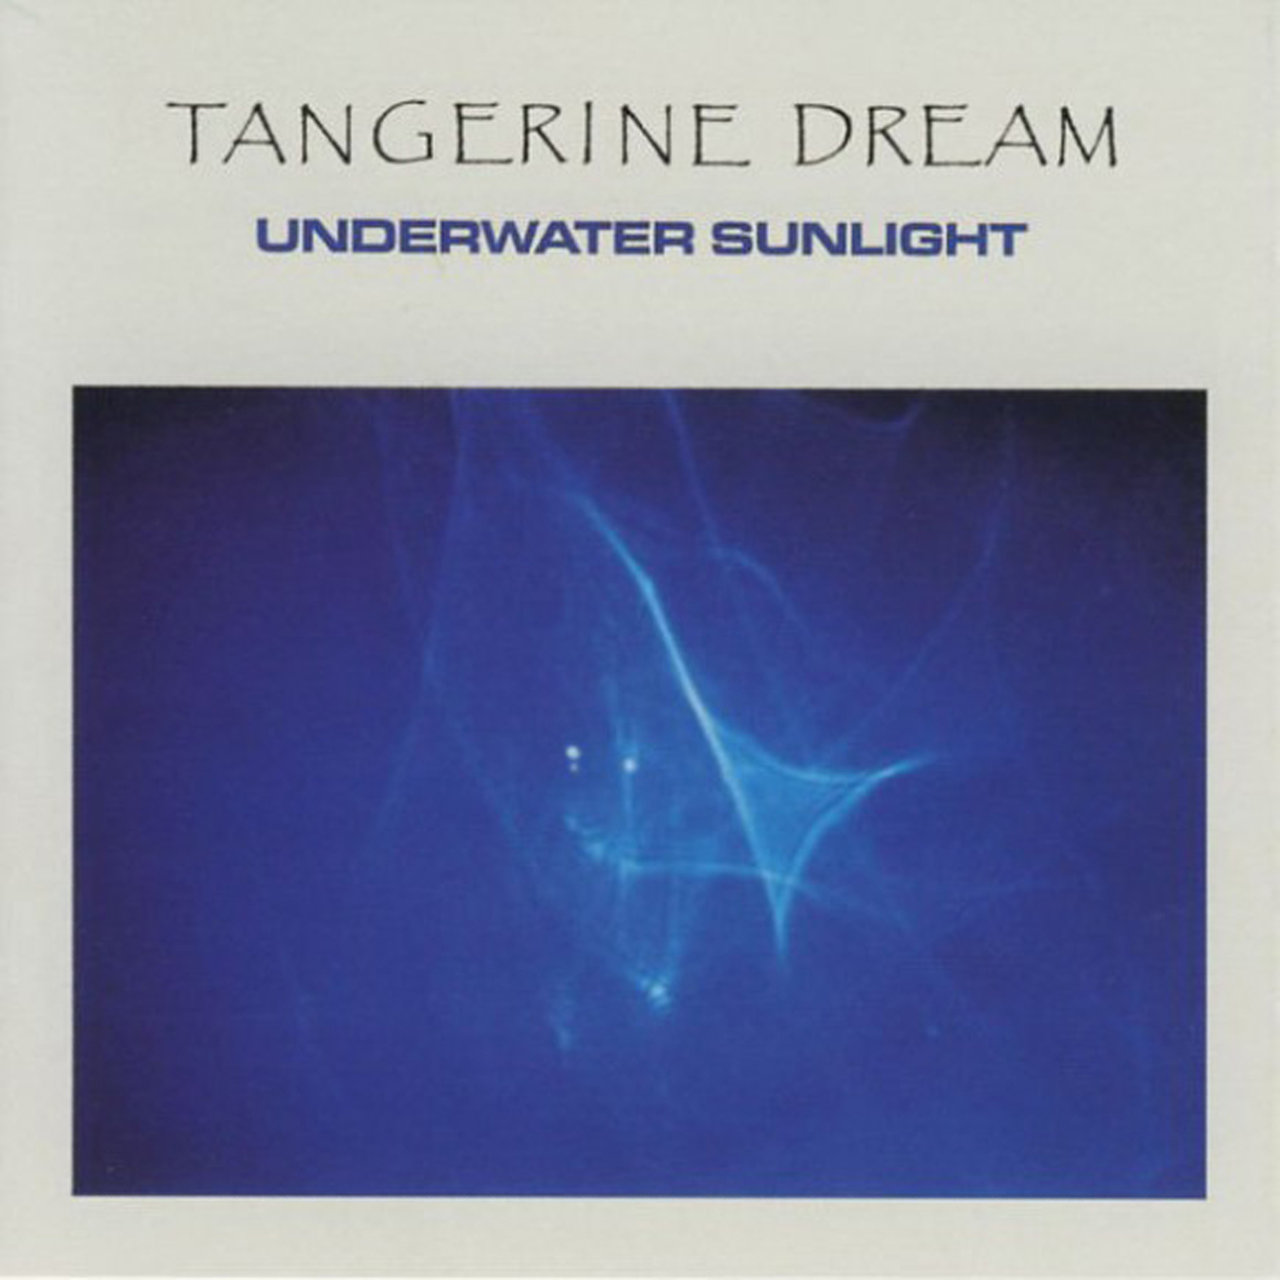 Tangerine Dream - Underwater Sunlight [1986]